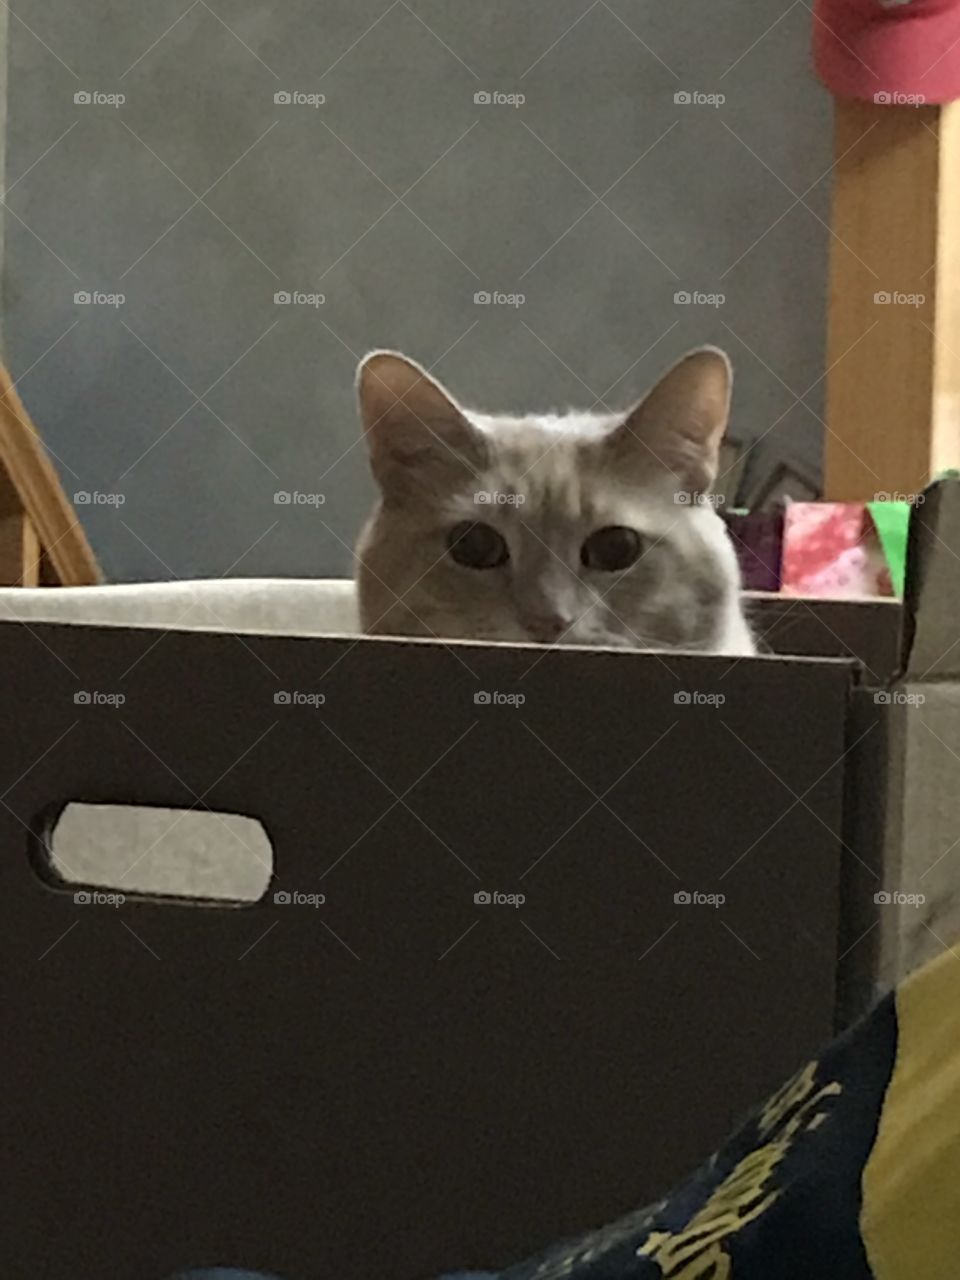 A cat peeking out of a box